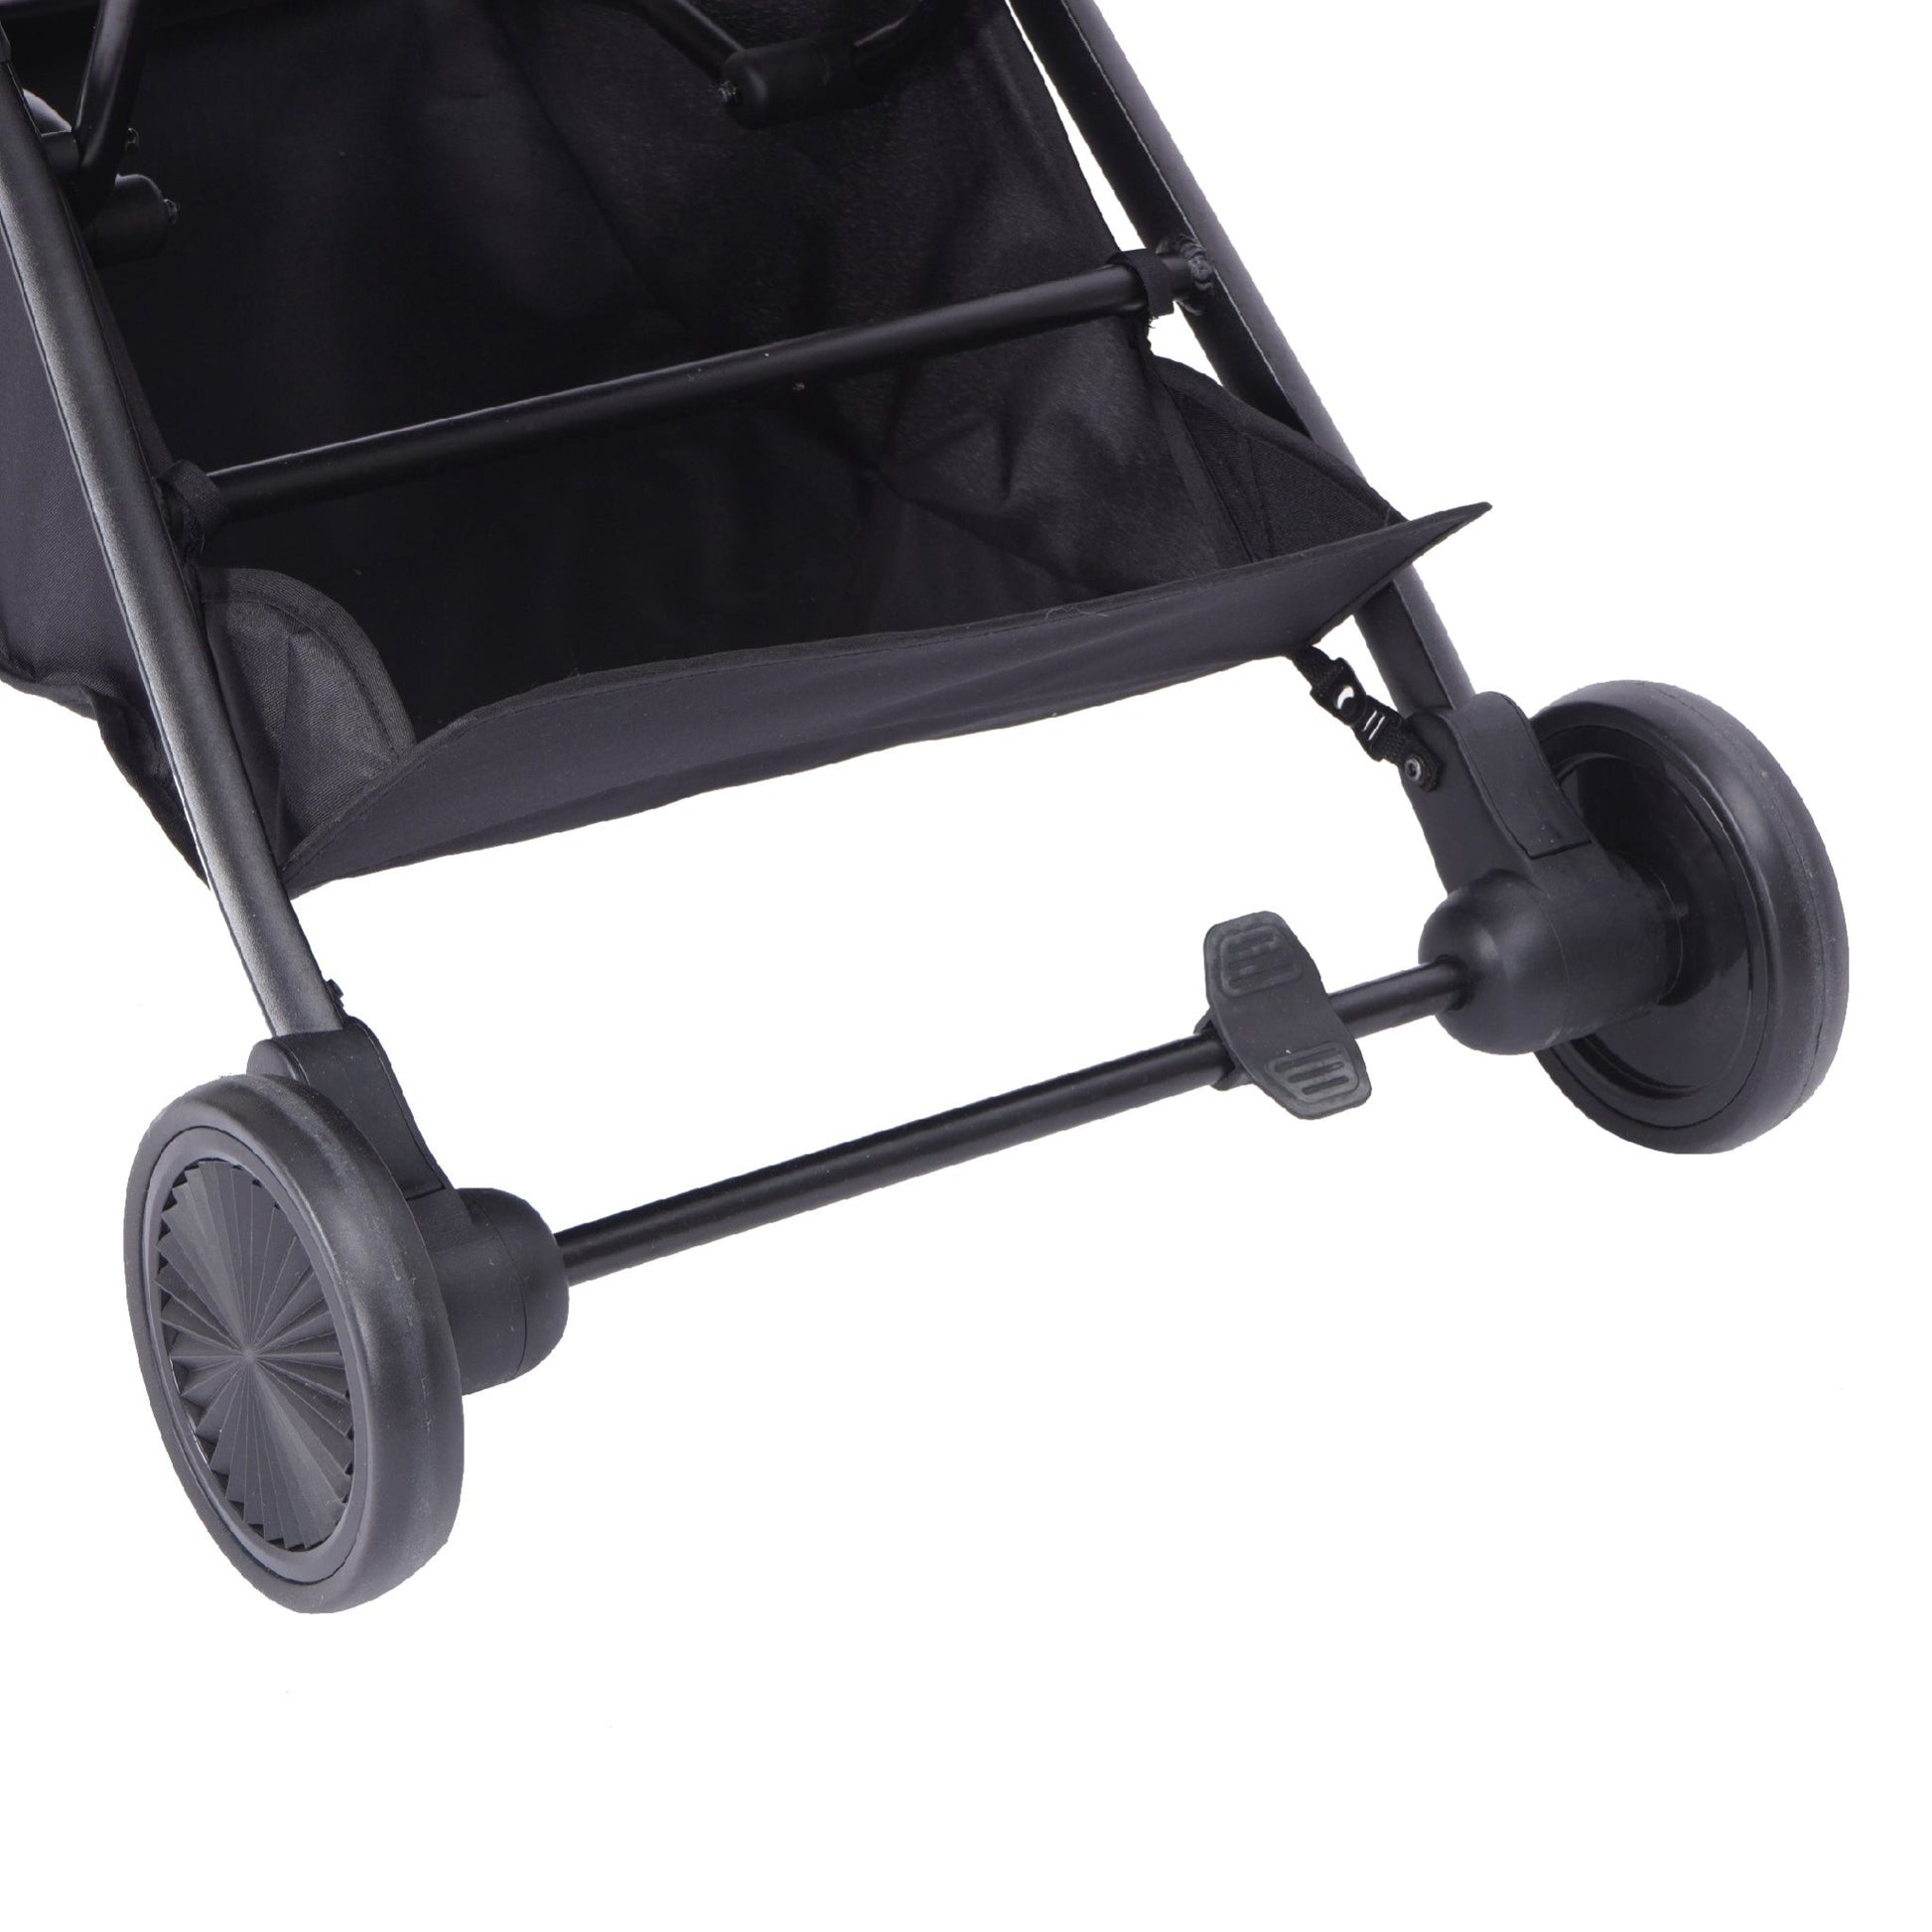 Single-Seat StrollerPlié AF-211 | Auto-folding Stroller